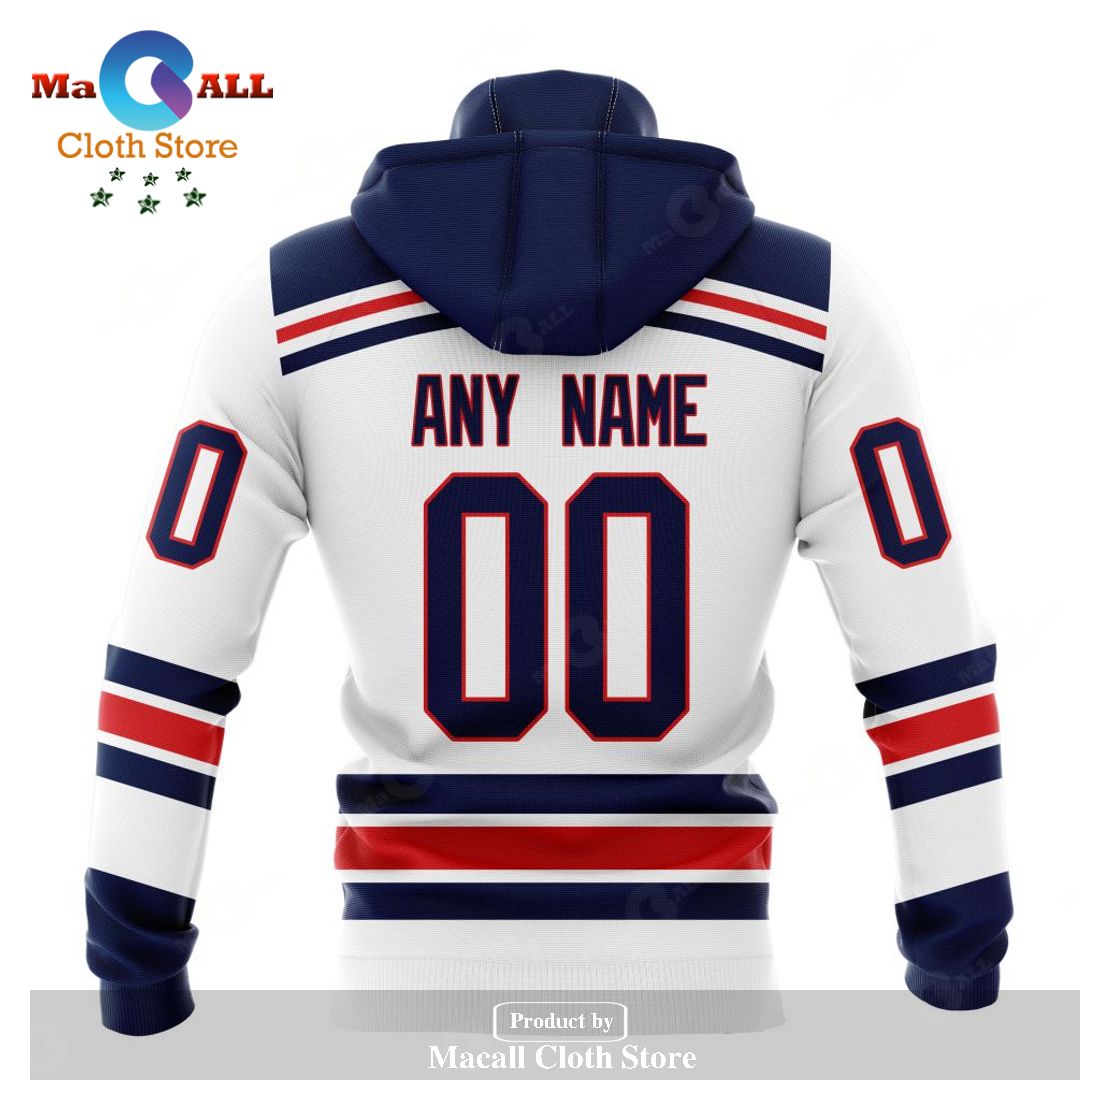 Personalized NHL New York Rangers Reverse Retro Hoodie, Shirt